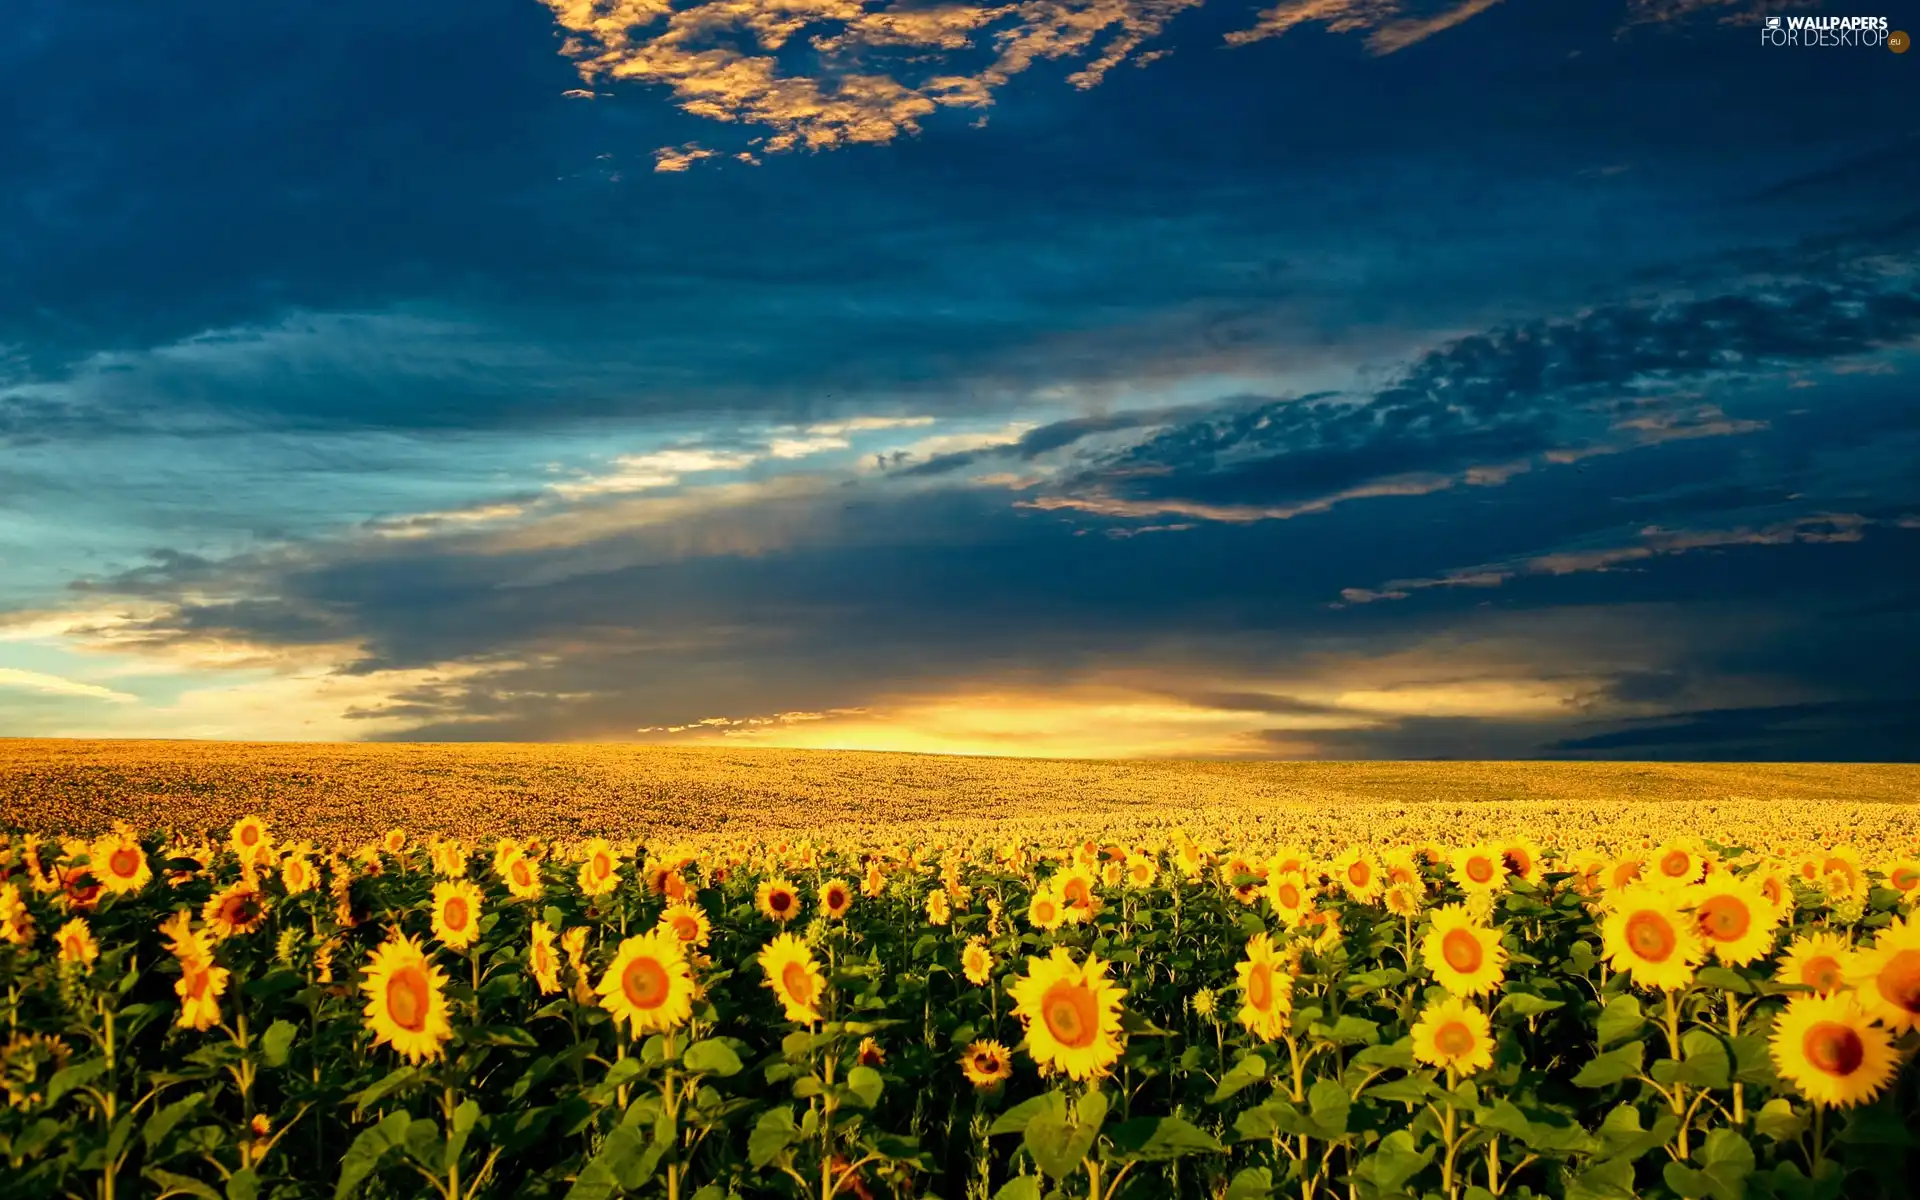 clouds, Field, sunflowers